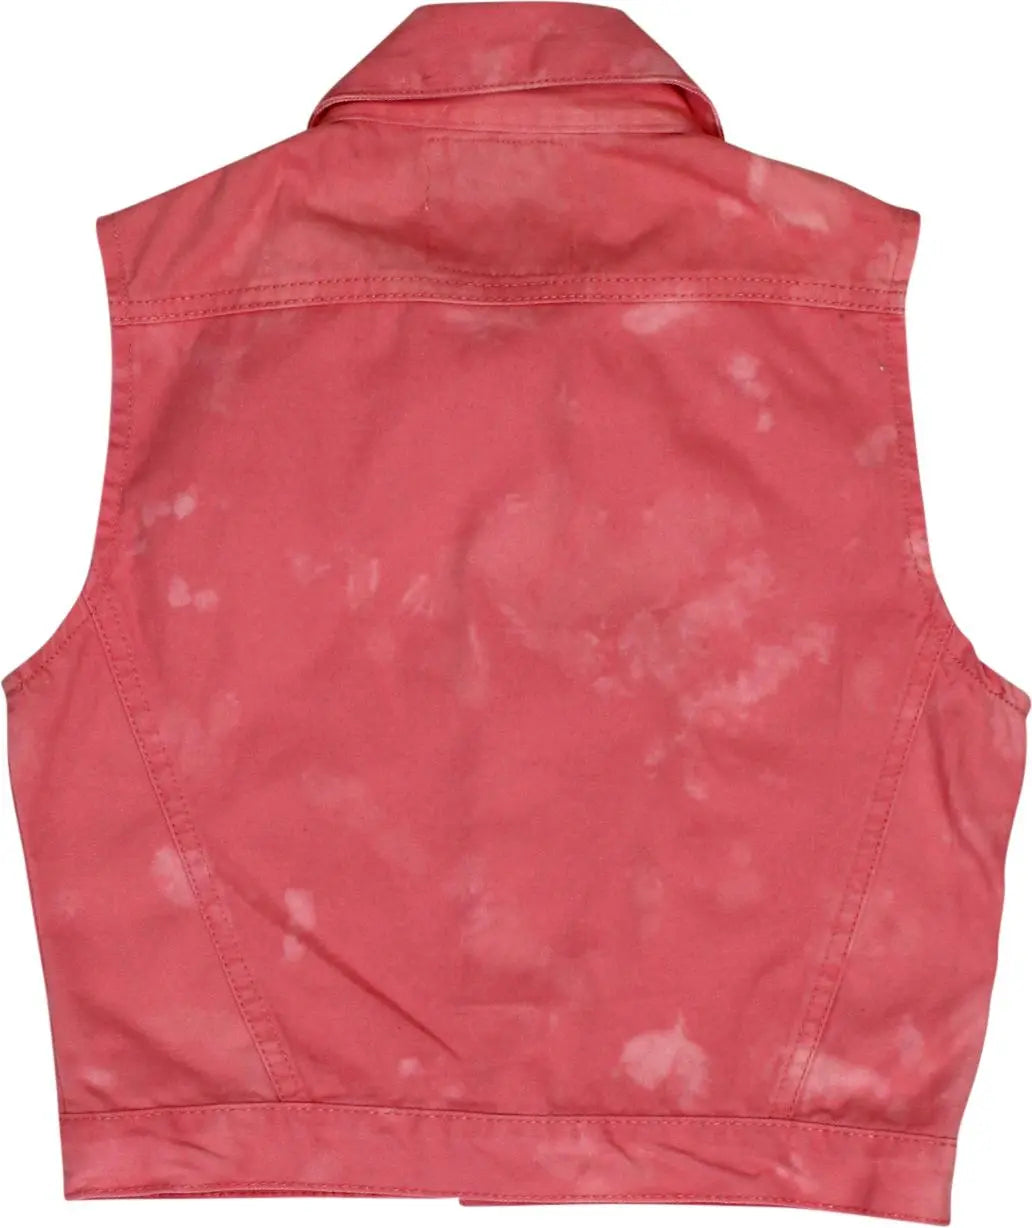 Driginal - Pink Sleeveless Denim Jacket- ThriftTale.com - Vintage and second handclothing